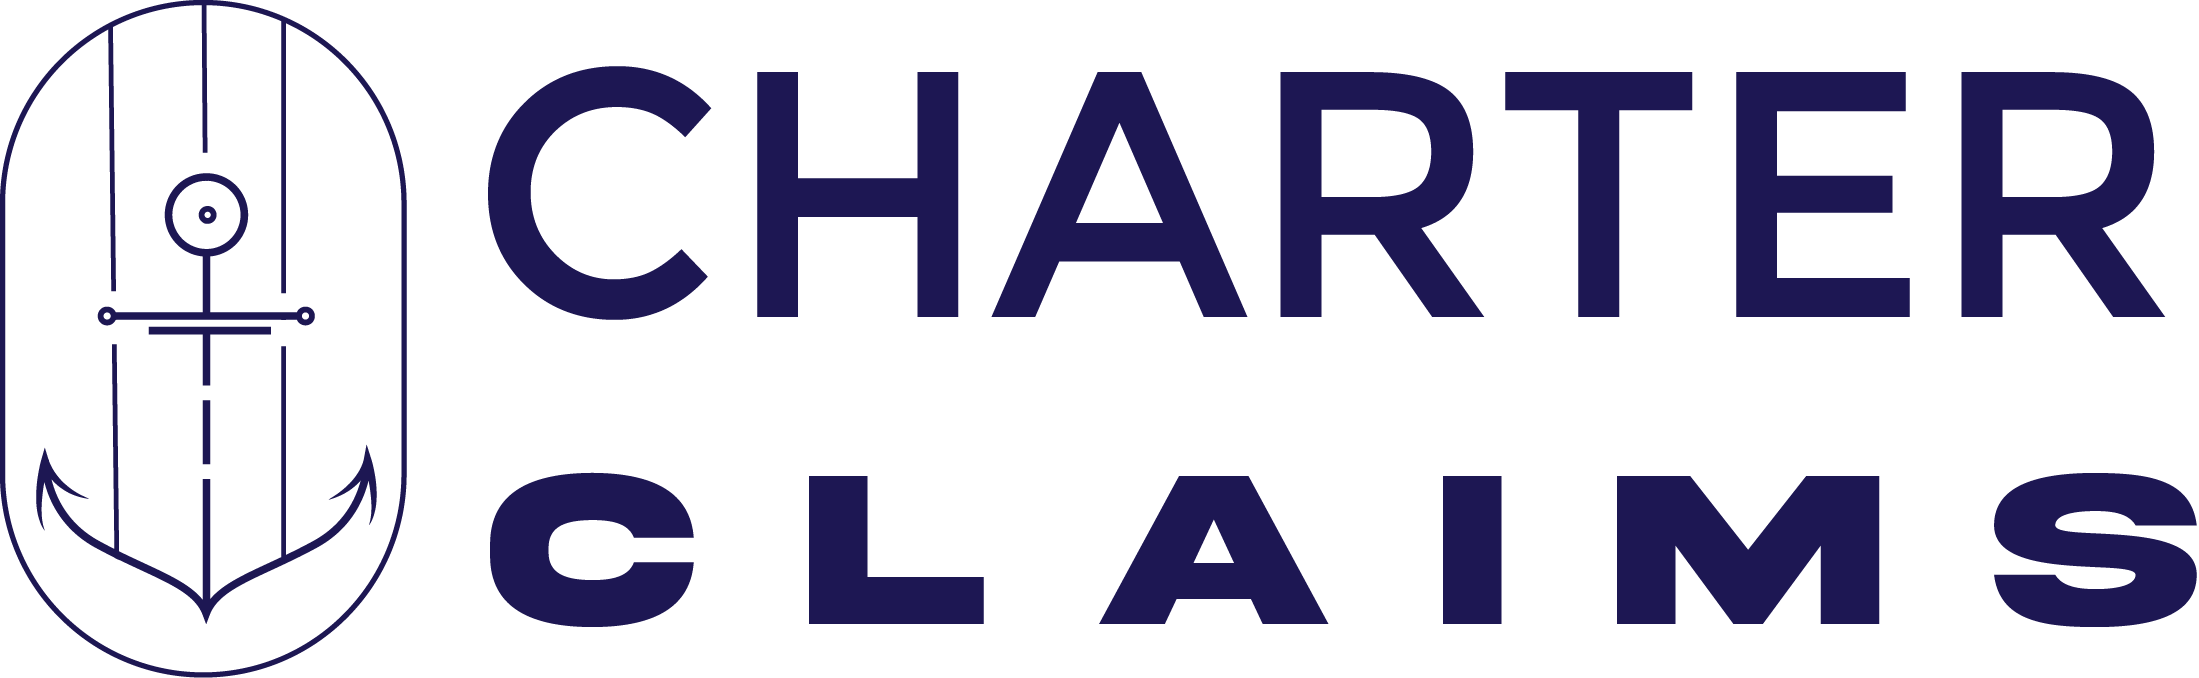 horizontal logo blue letters